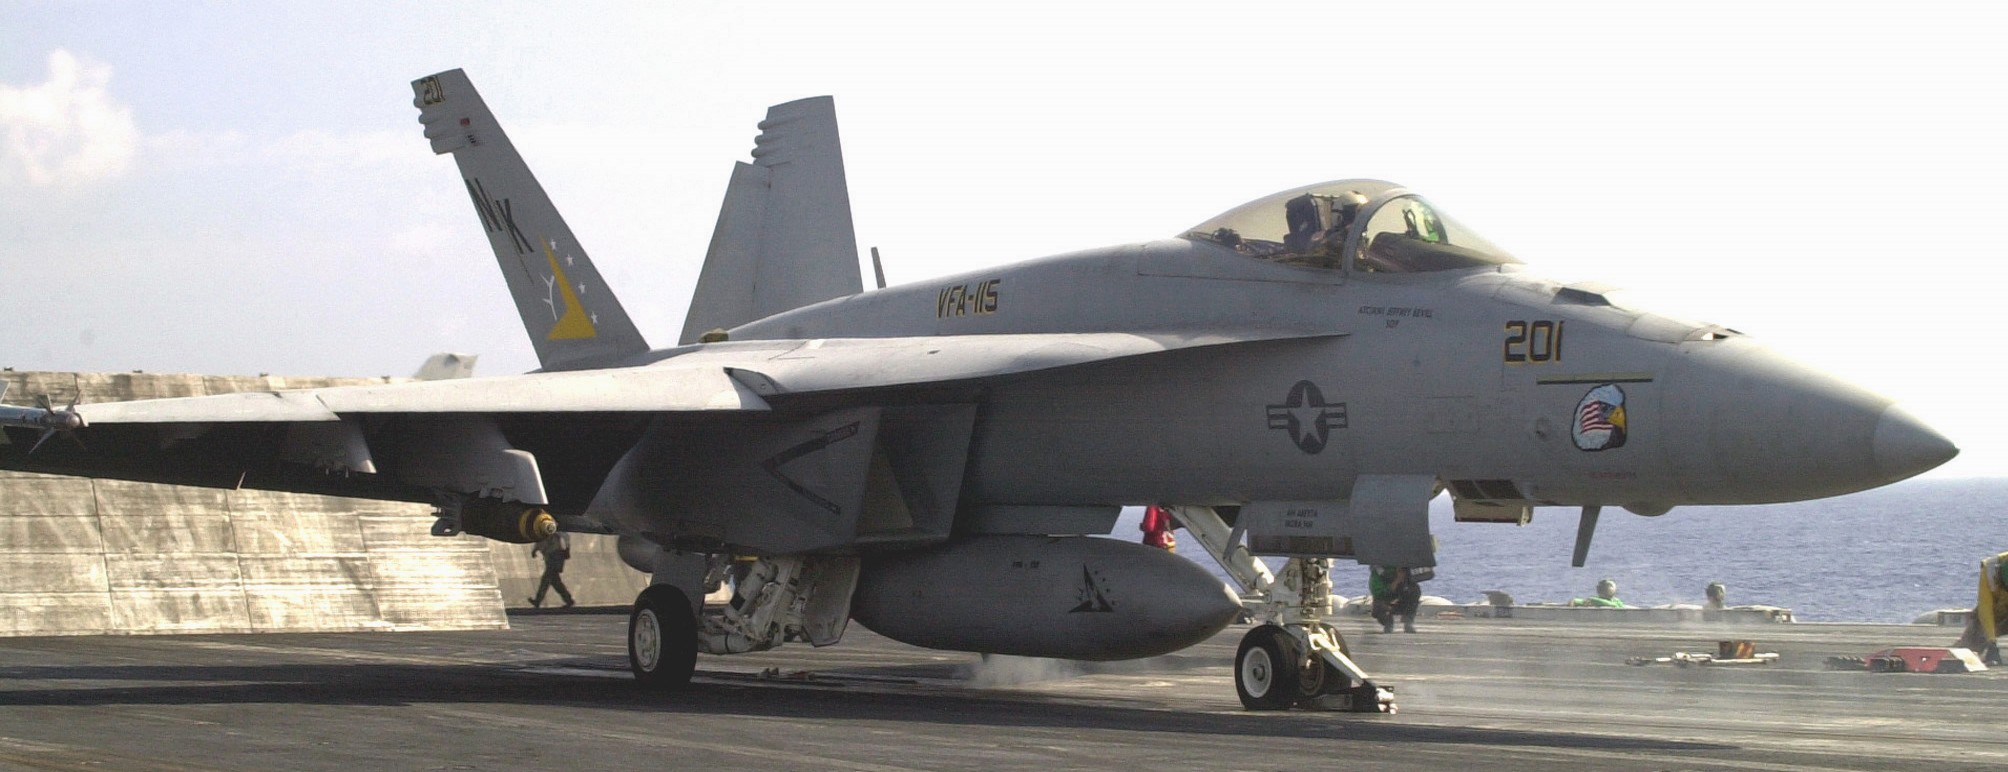 vfa-115 eagles strike fighter squadron f/a-18e super hornet cvw-14 uss abraham lincoln cvn-72 2002 69